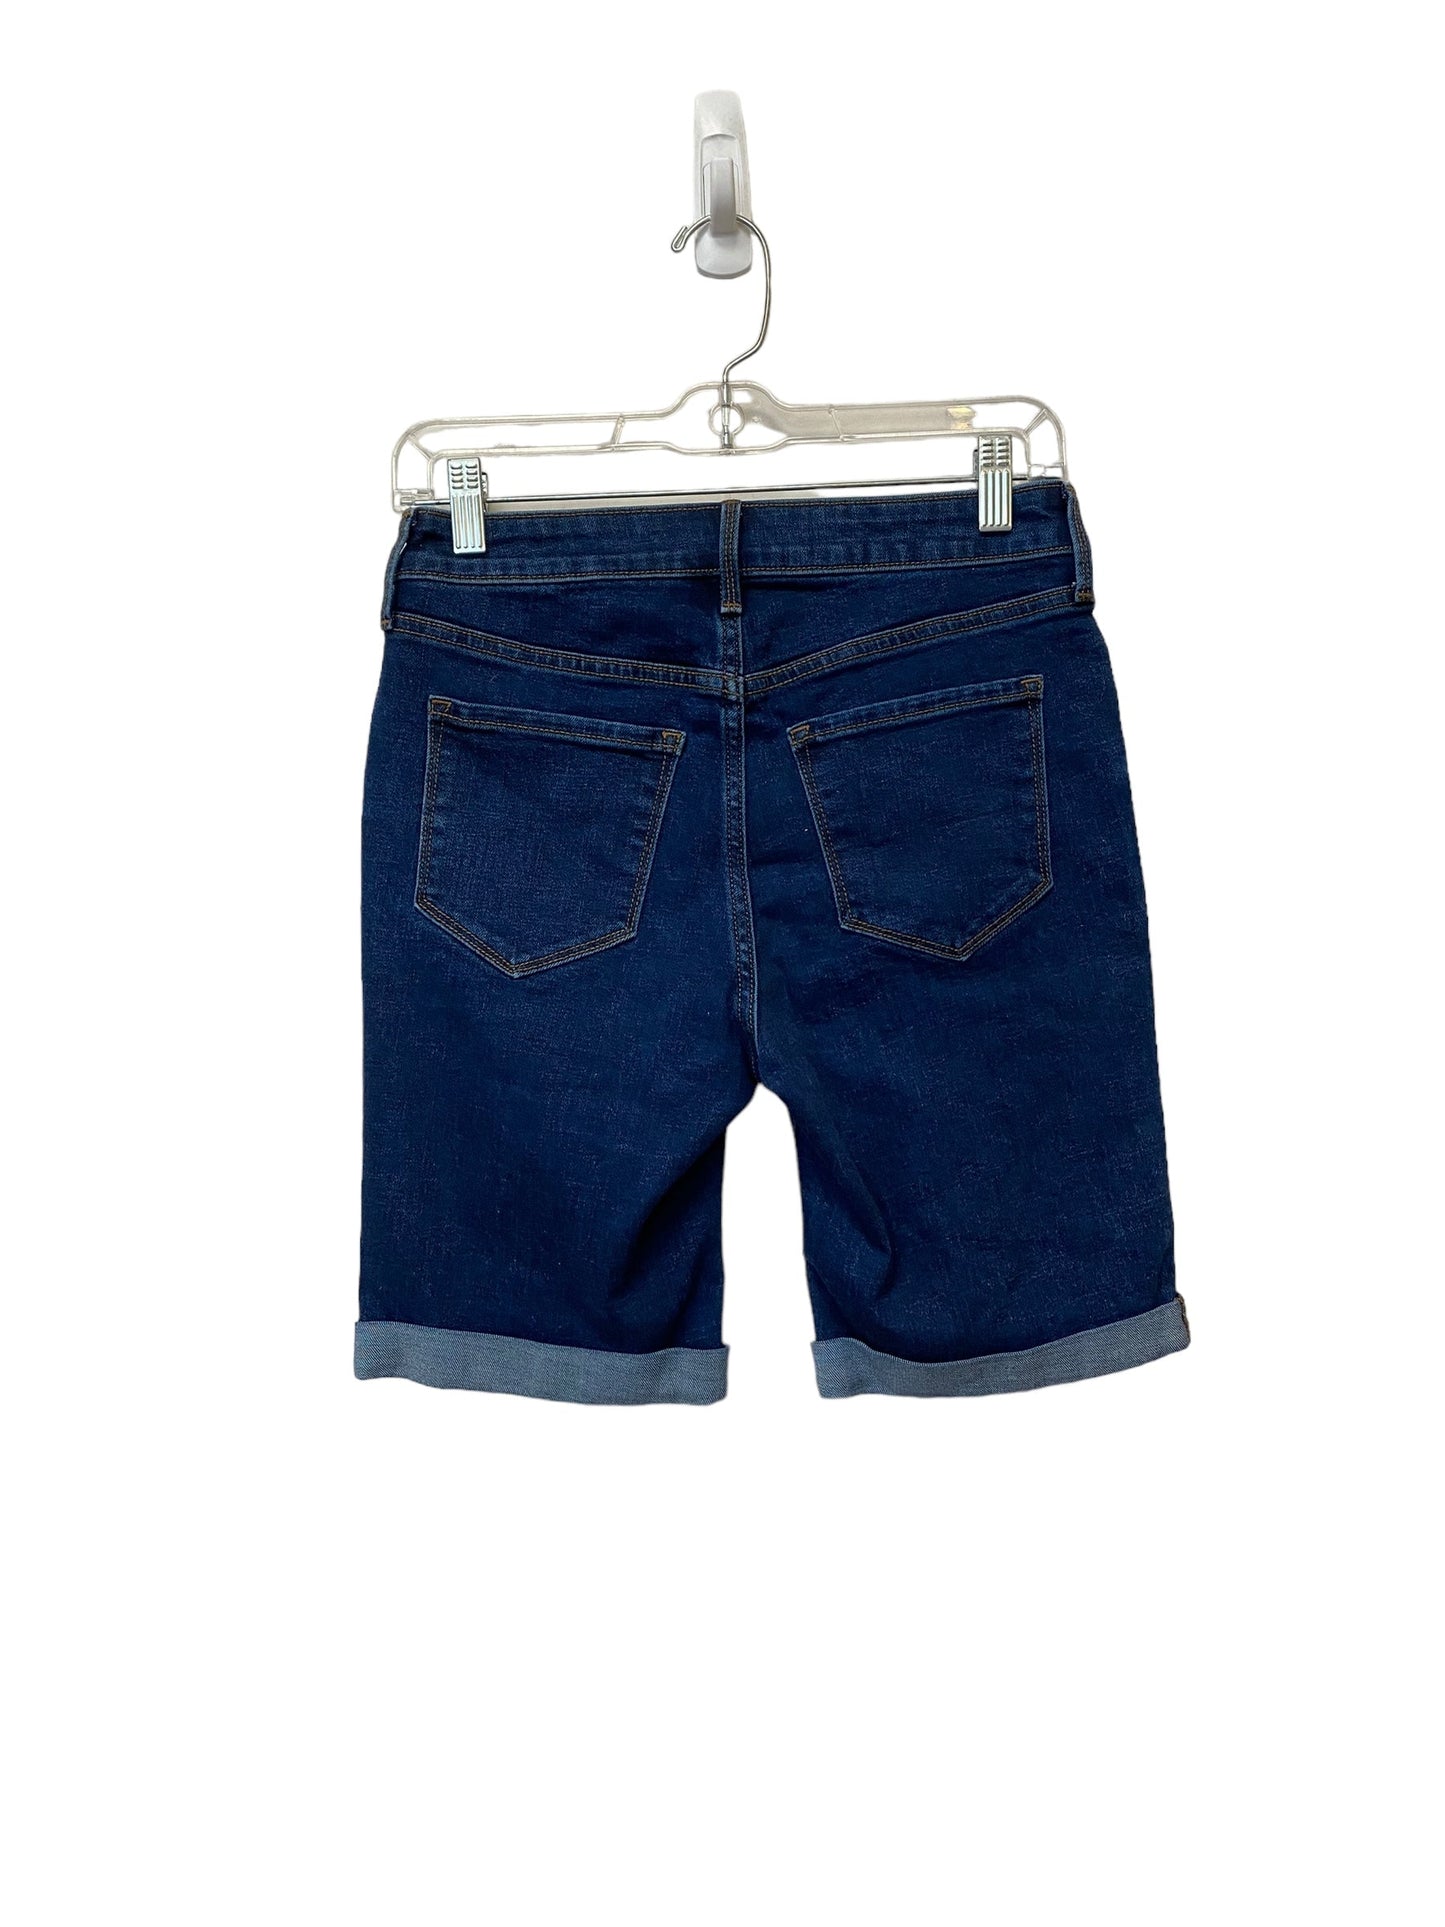 Blue Denim Shorts Old Navy, Size 4